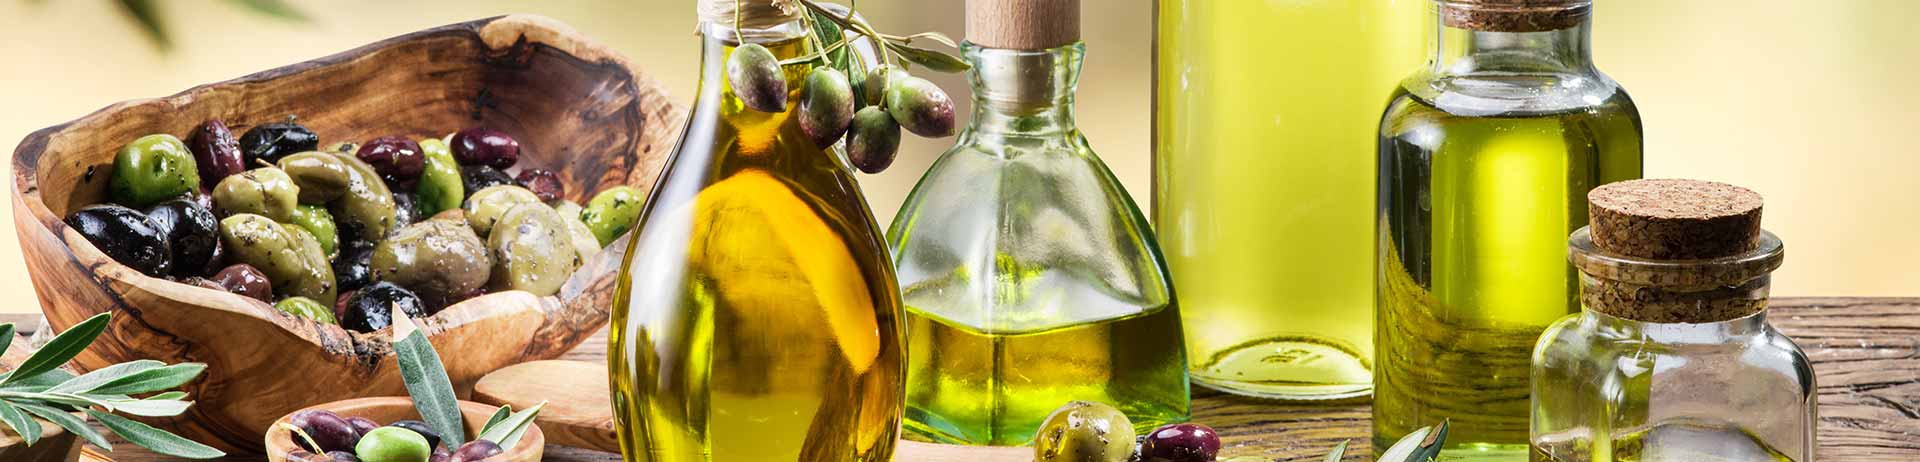 Botellas con aceite de oliva